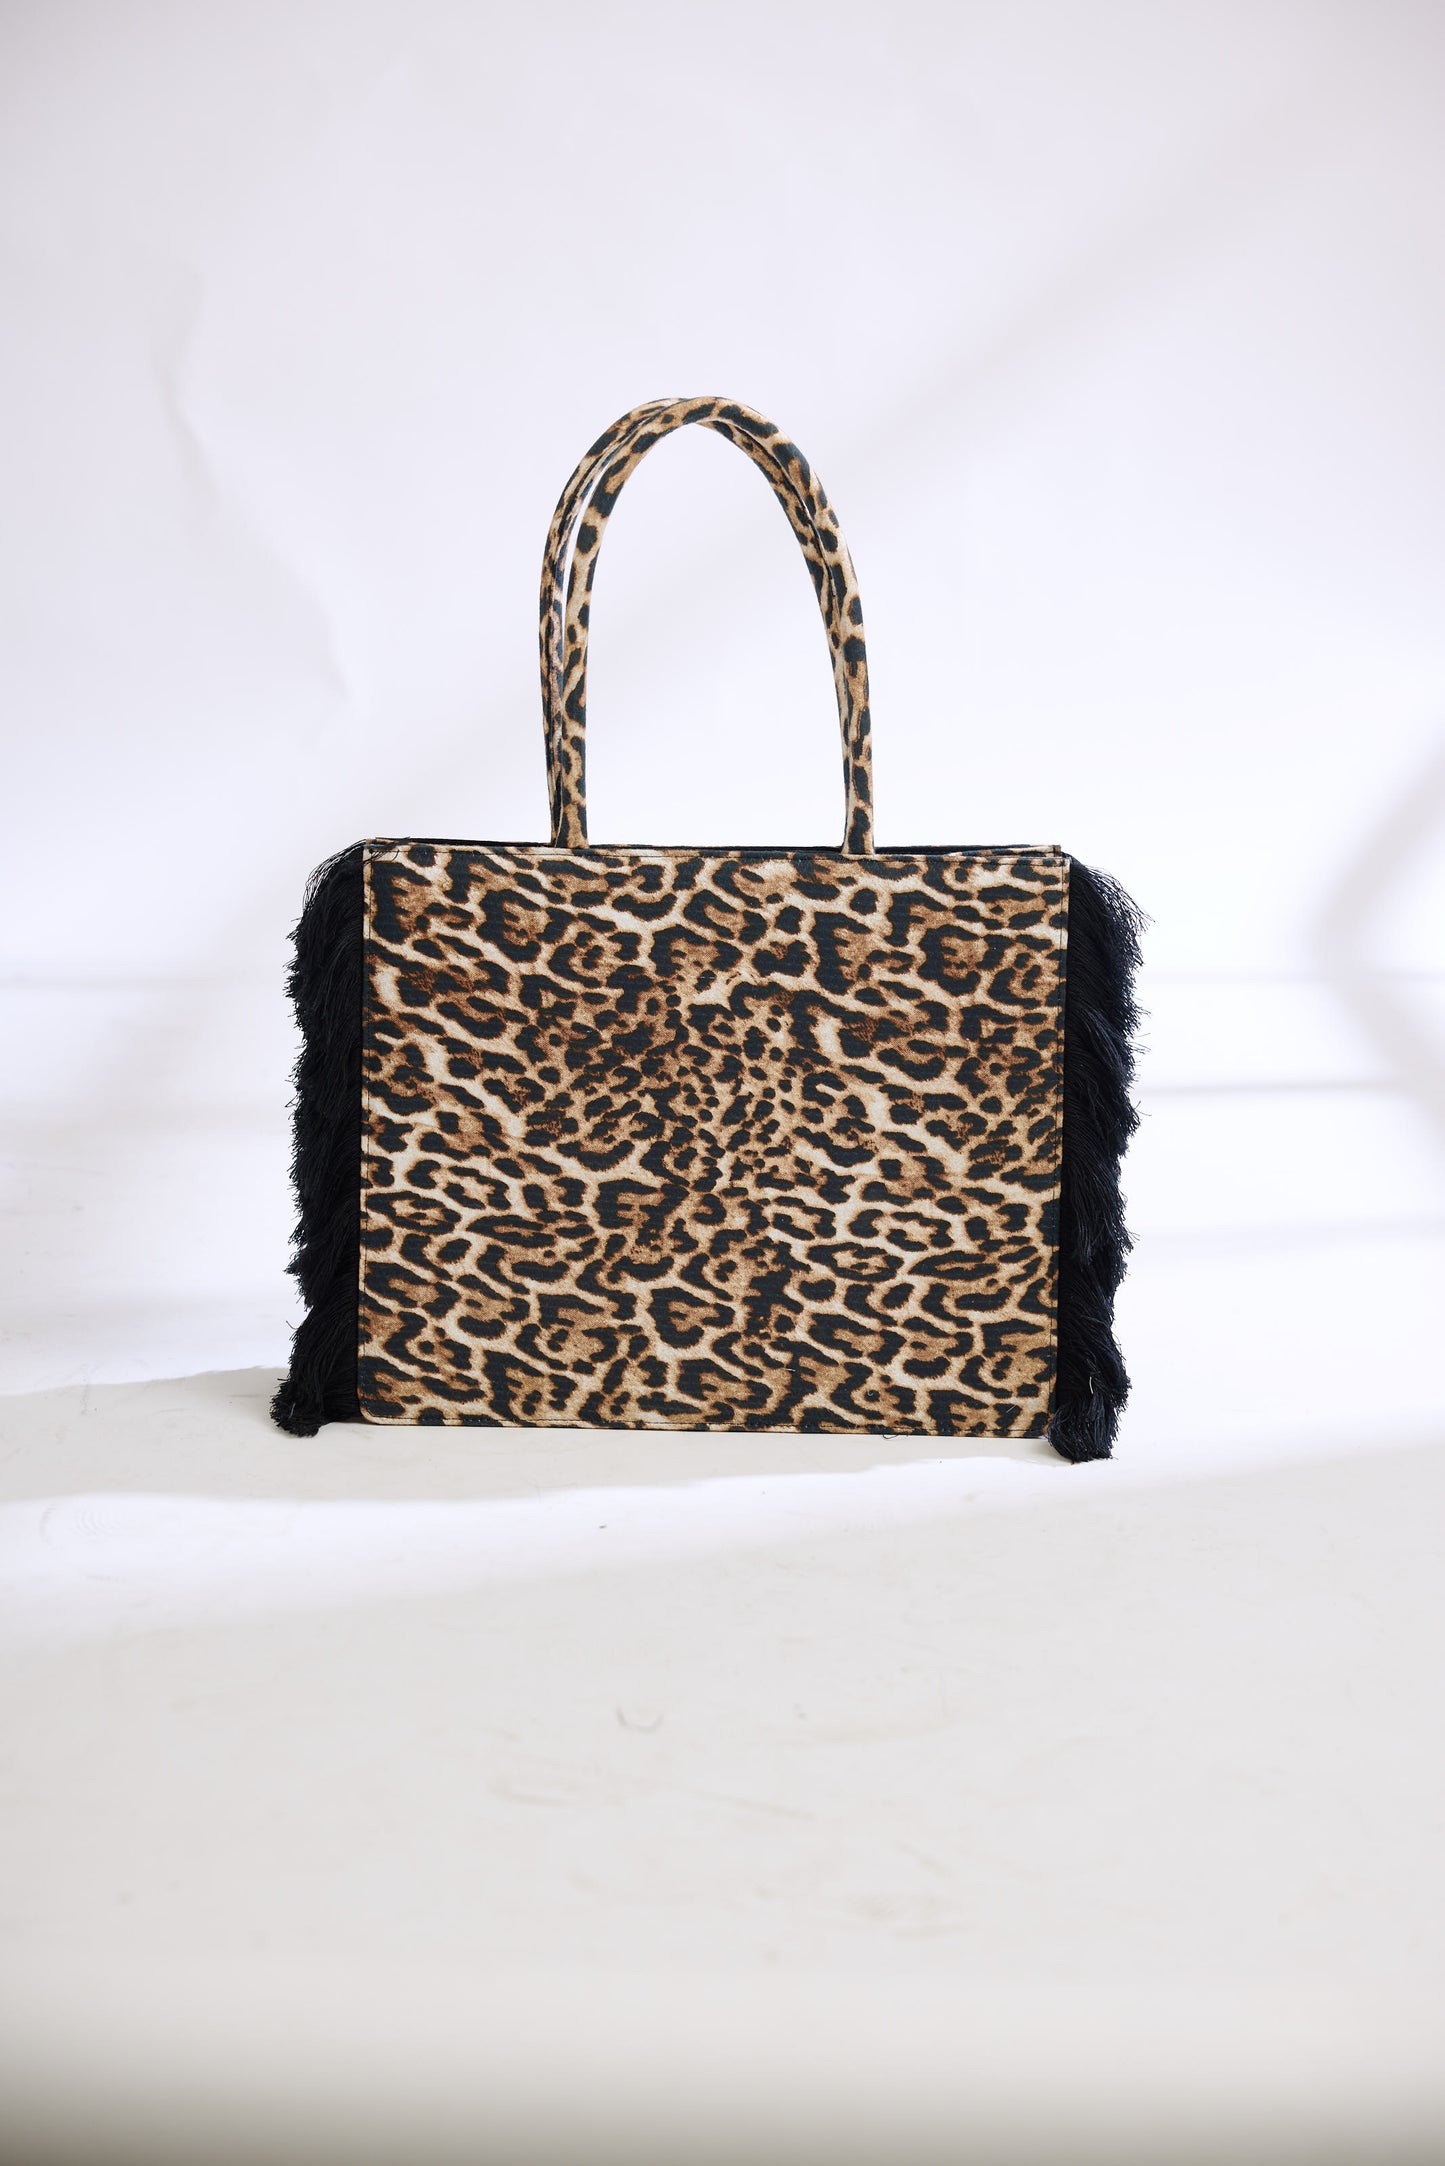 Leopard Tote Bag